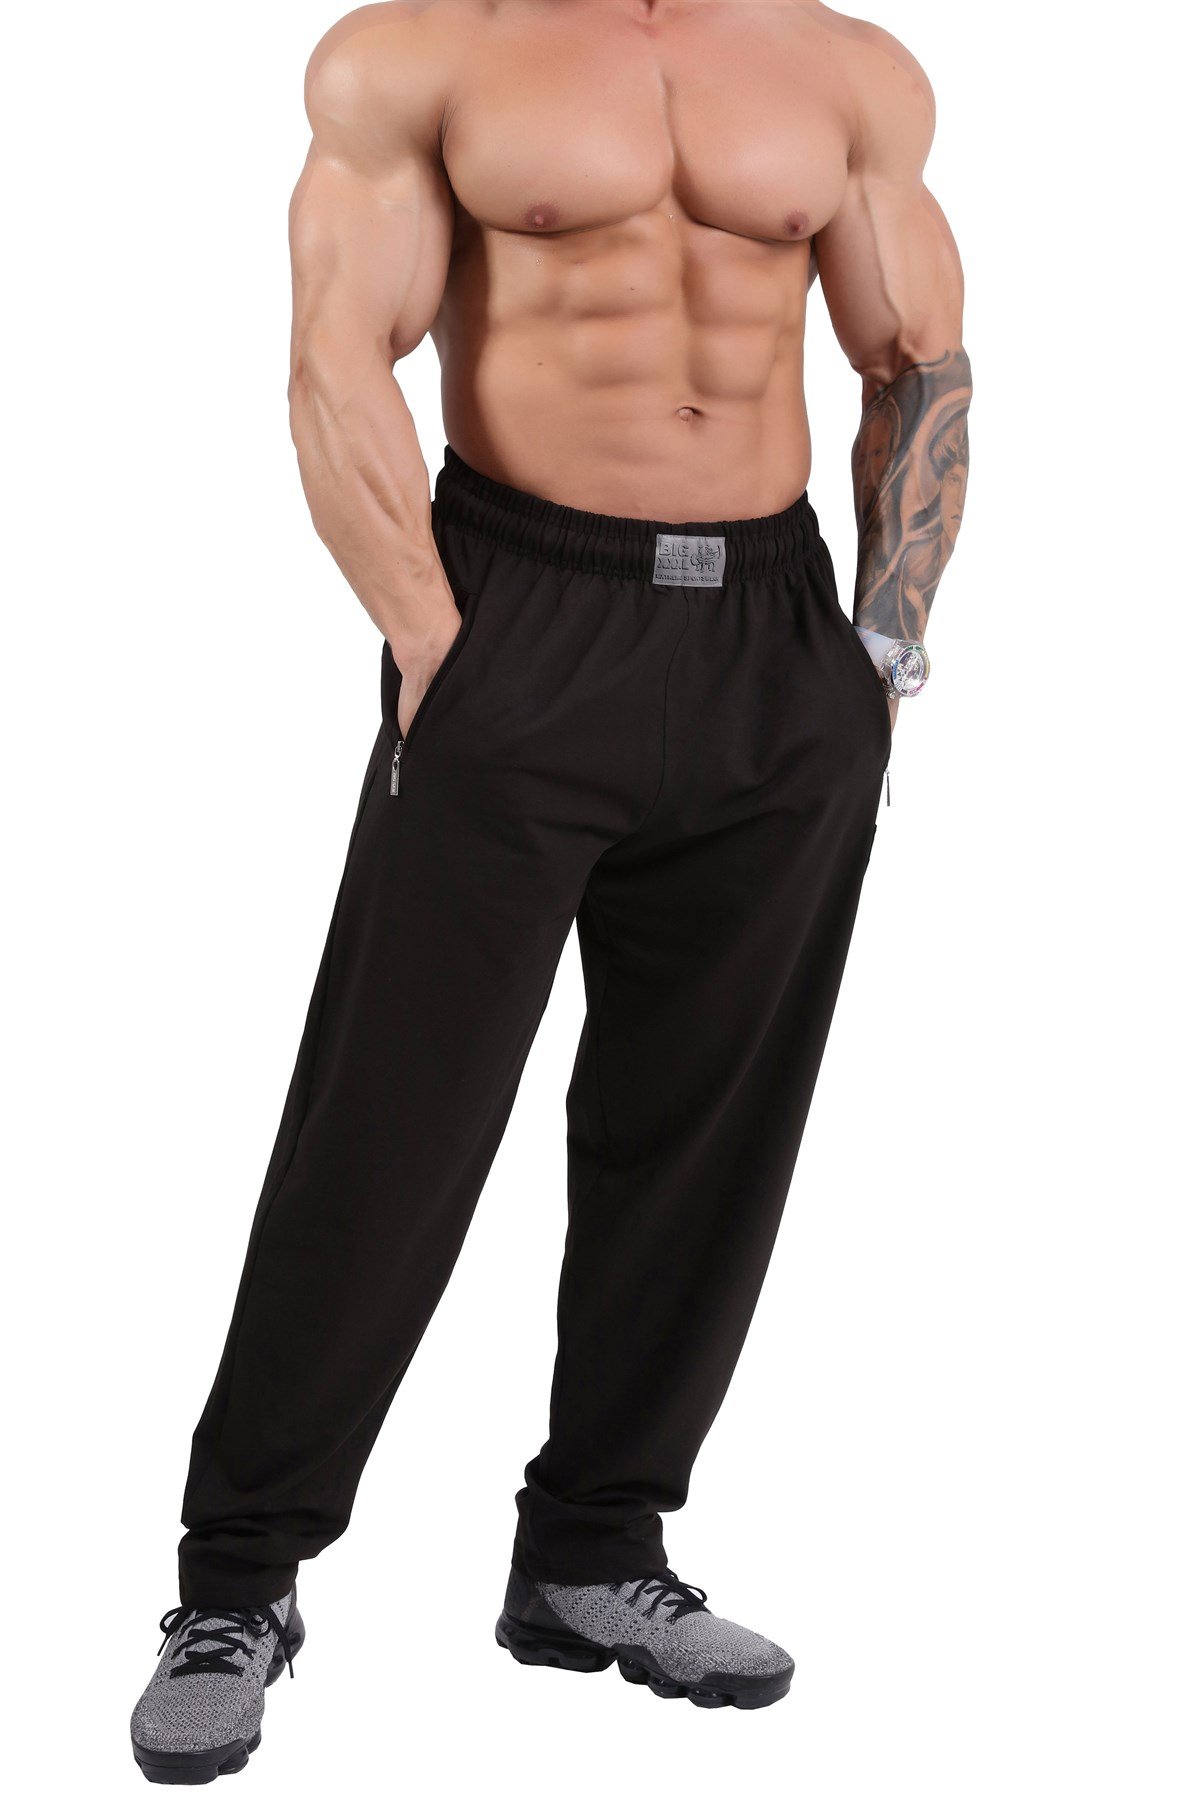 Men's Baggy Bodybuilding Workout Muscle Pants